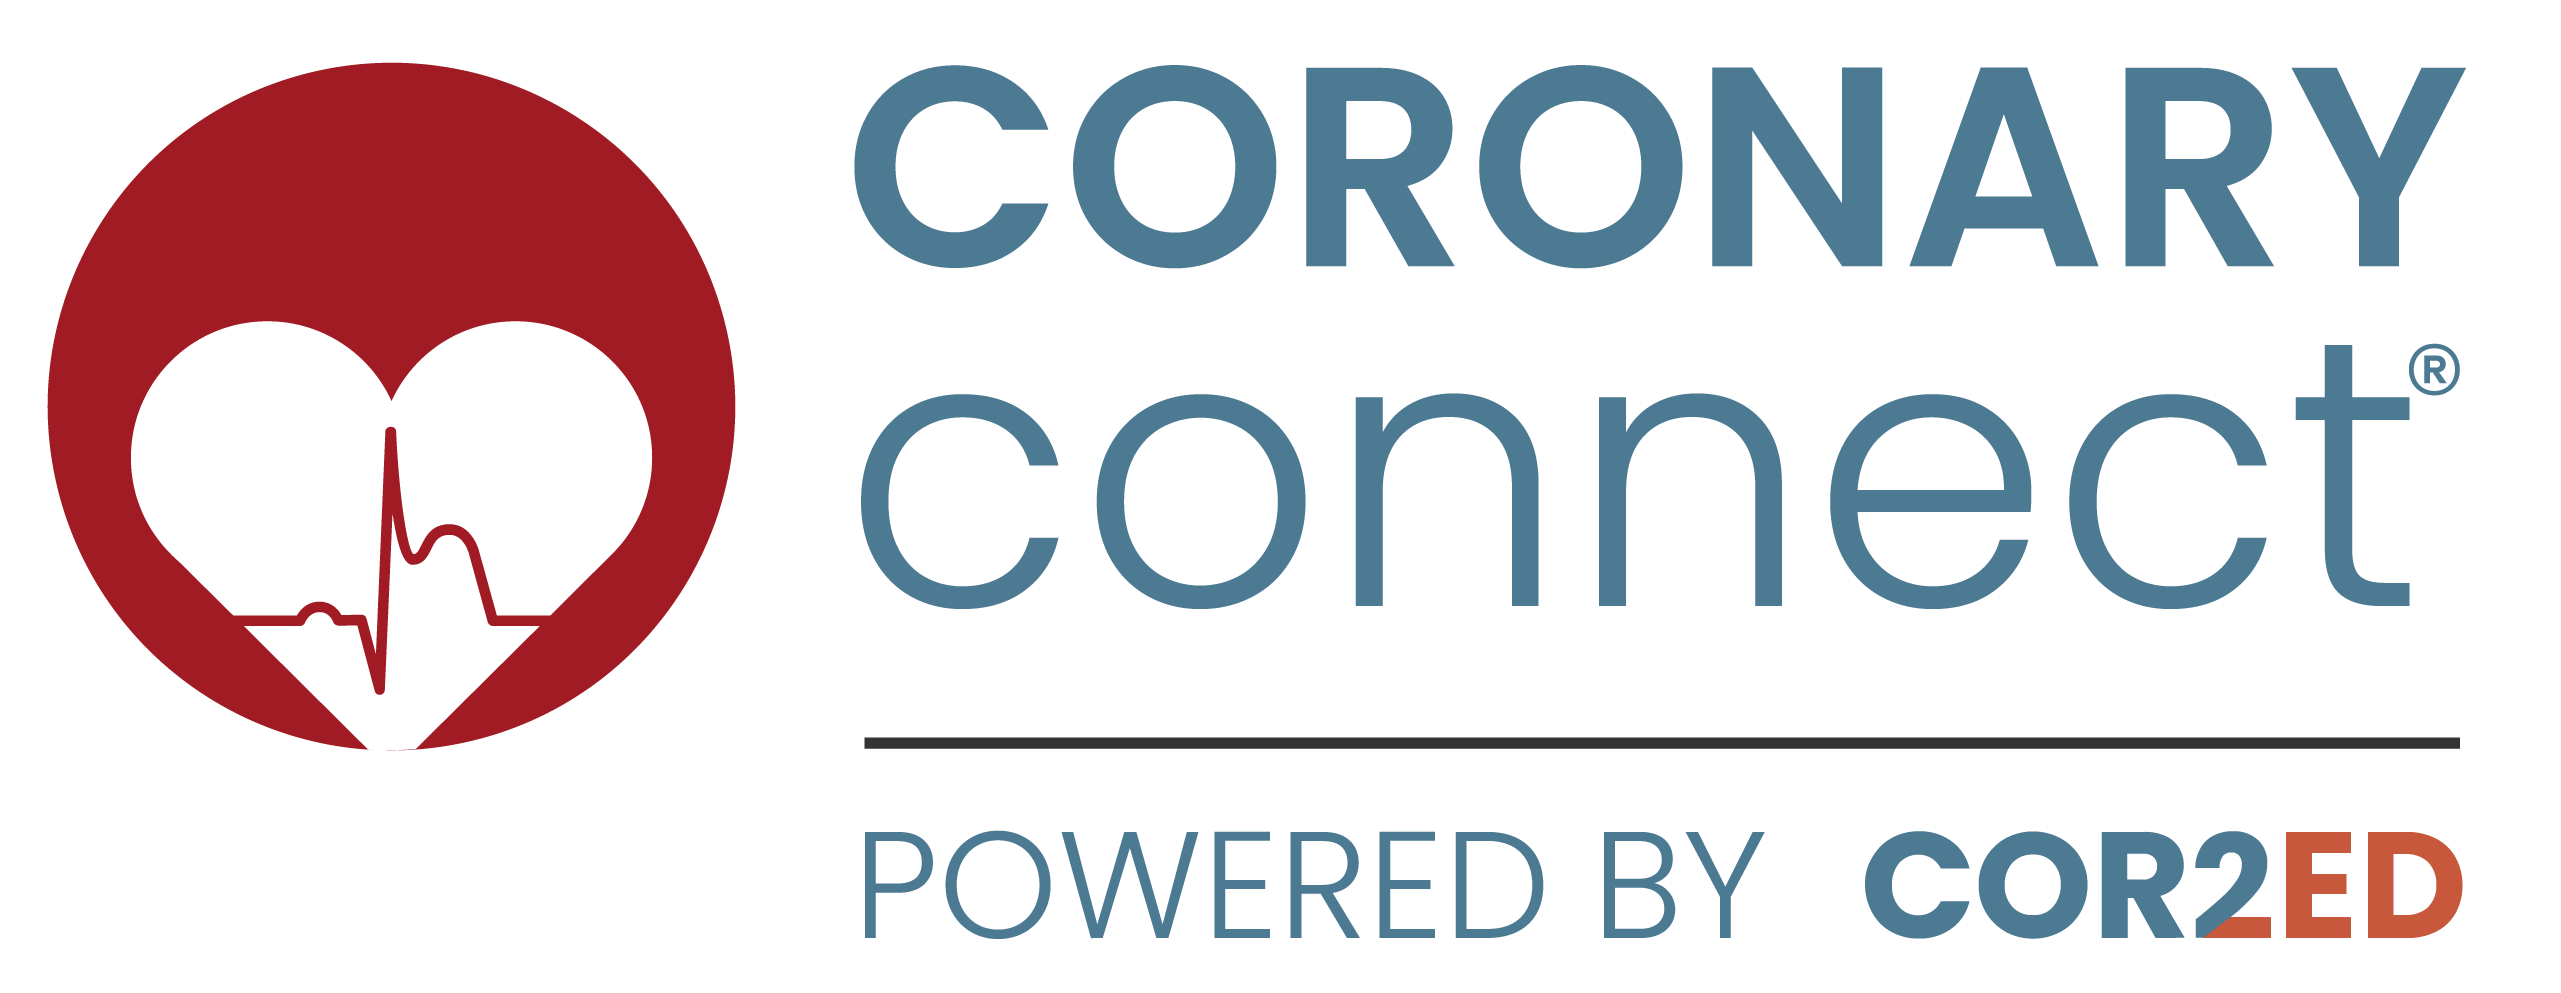 coronary-connect-logo